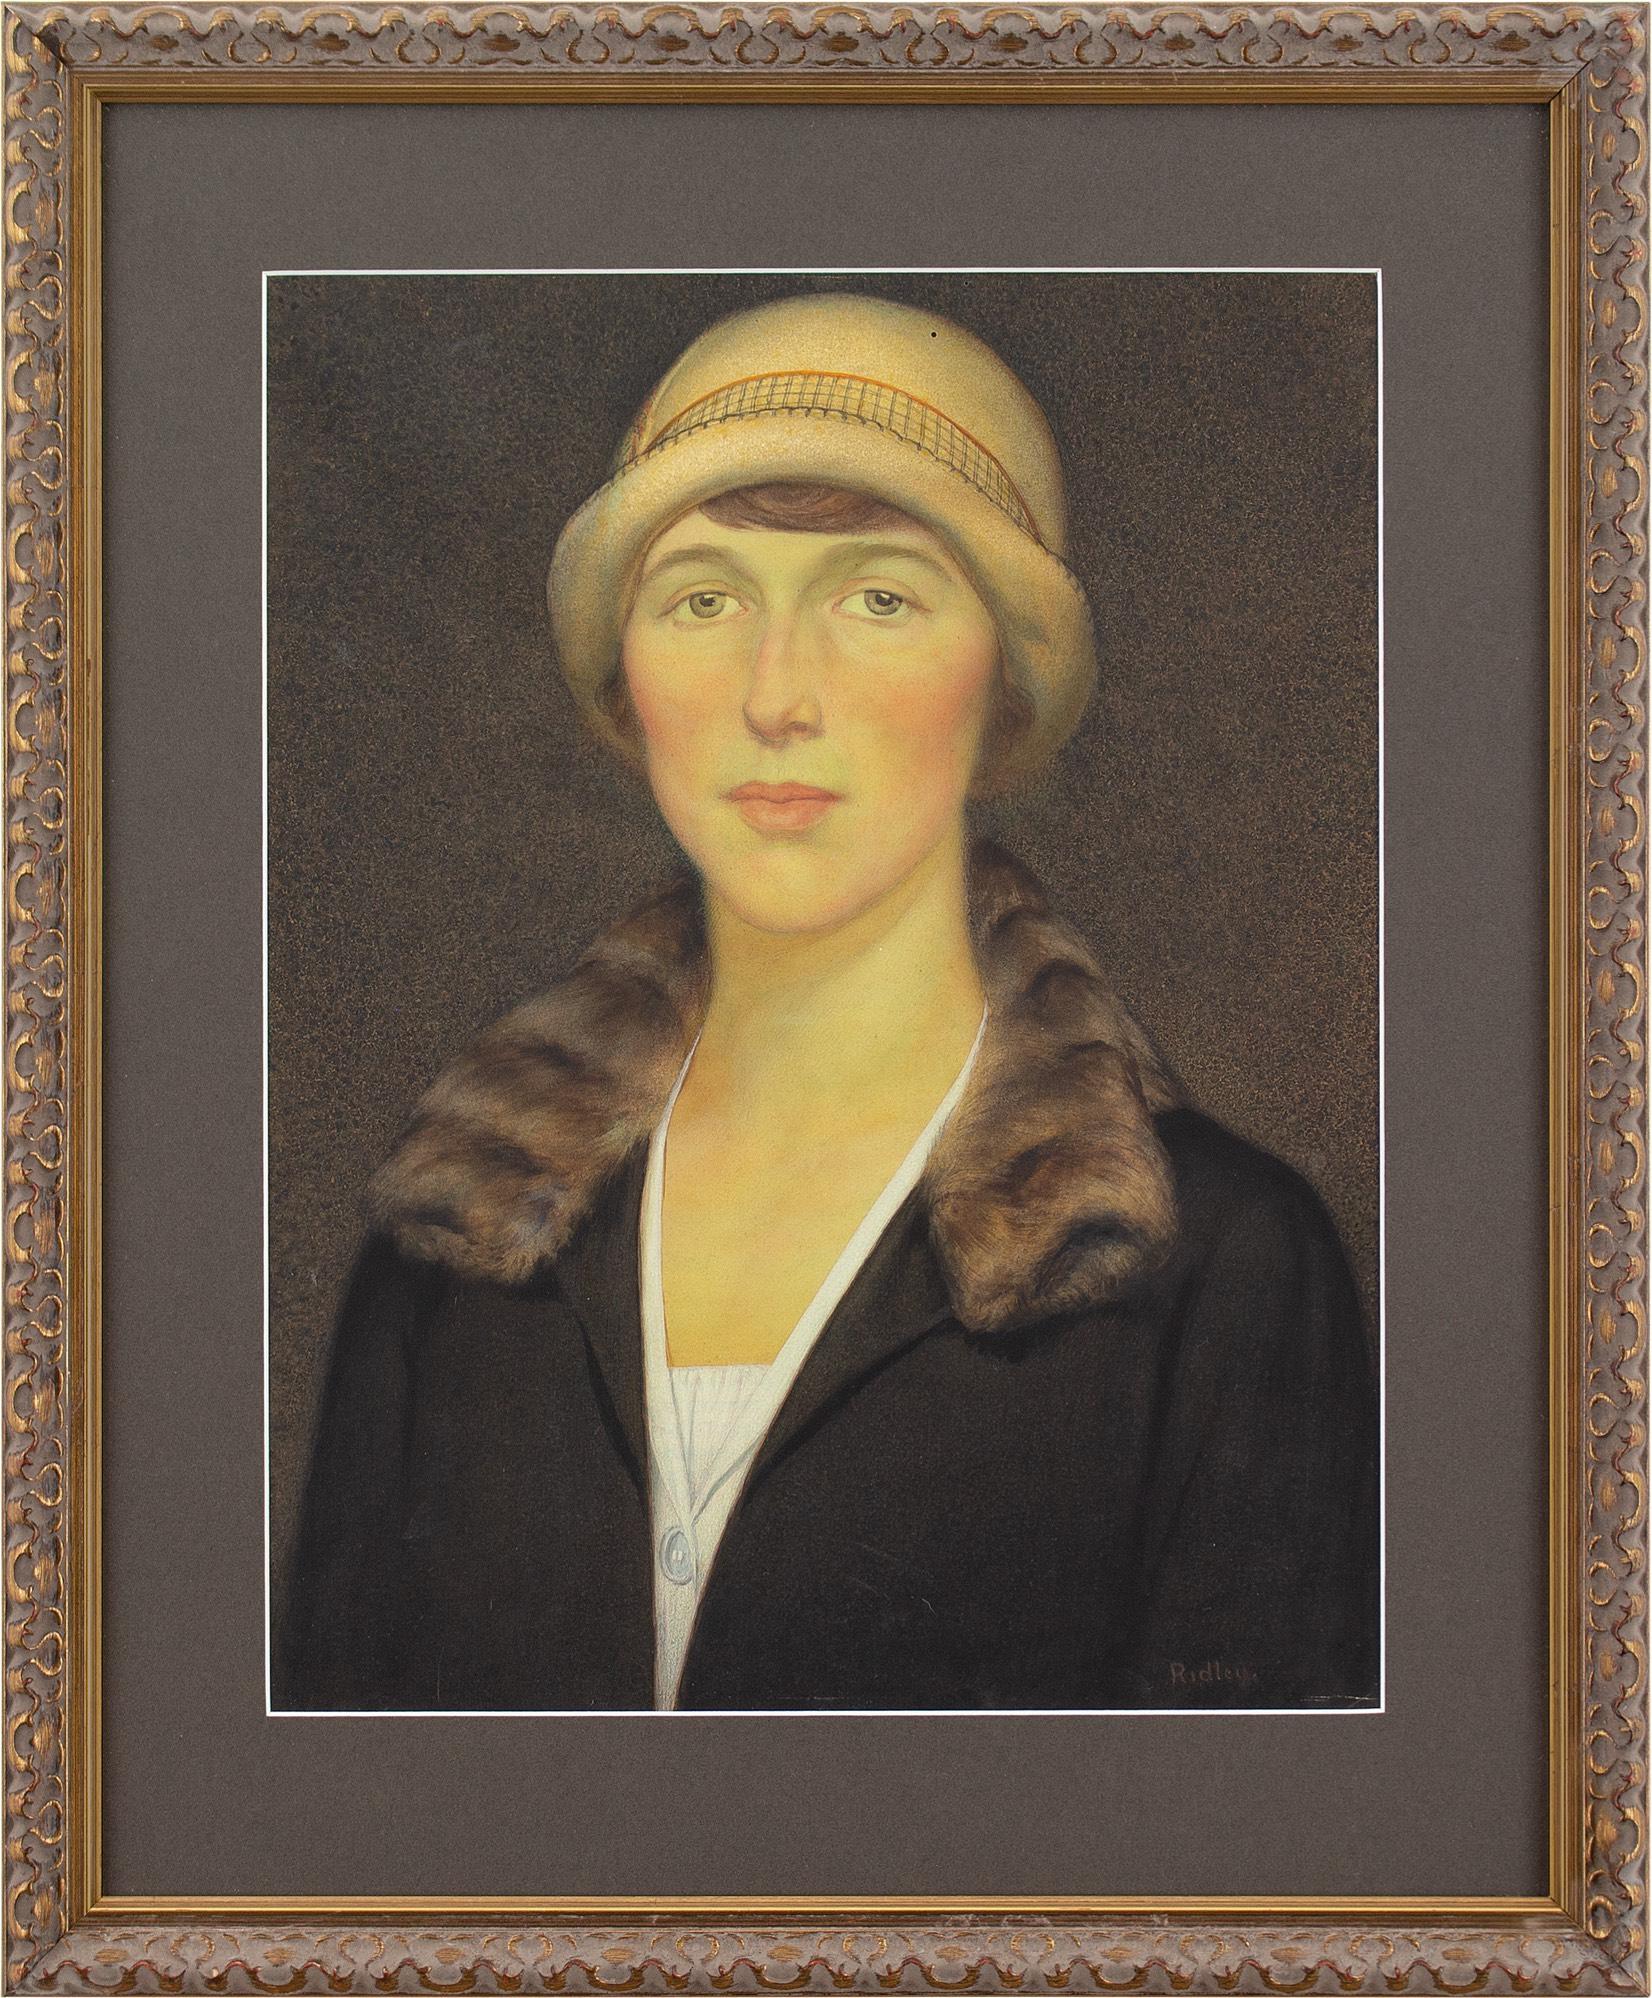 Edward Ridley, Porträt einer Frau, Aquarell, 1920er-Jahre